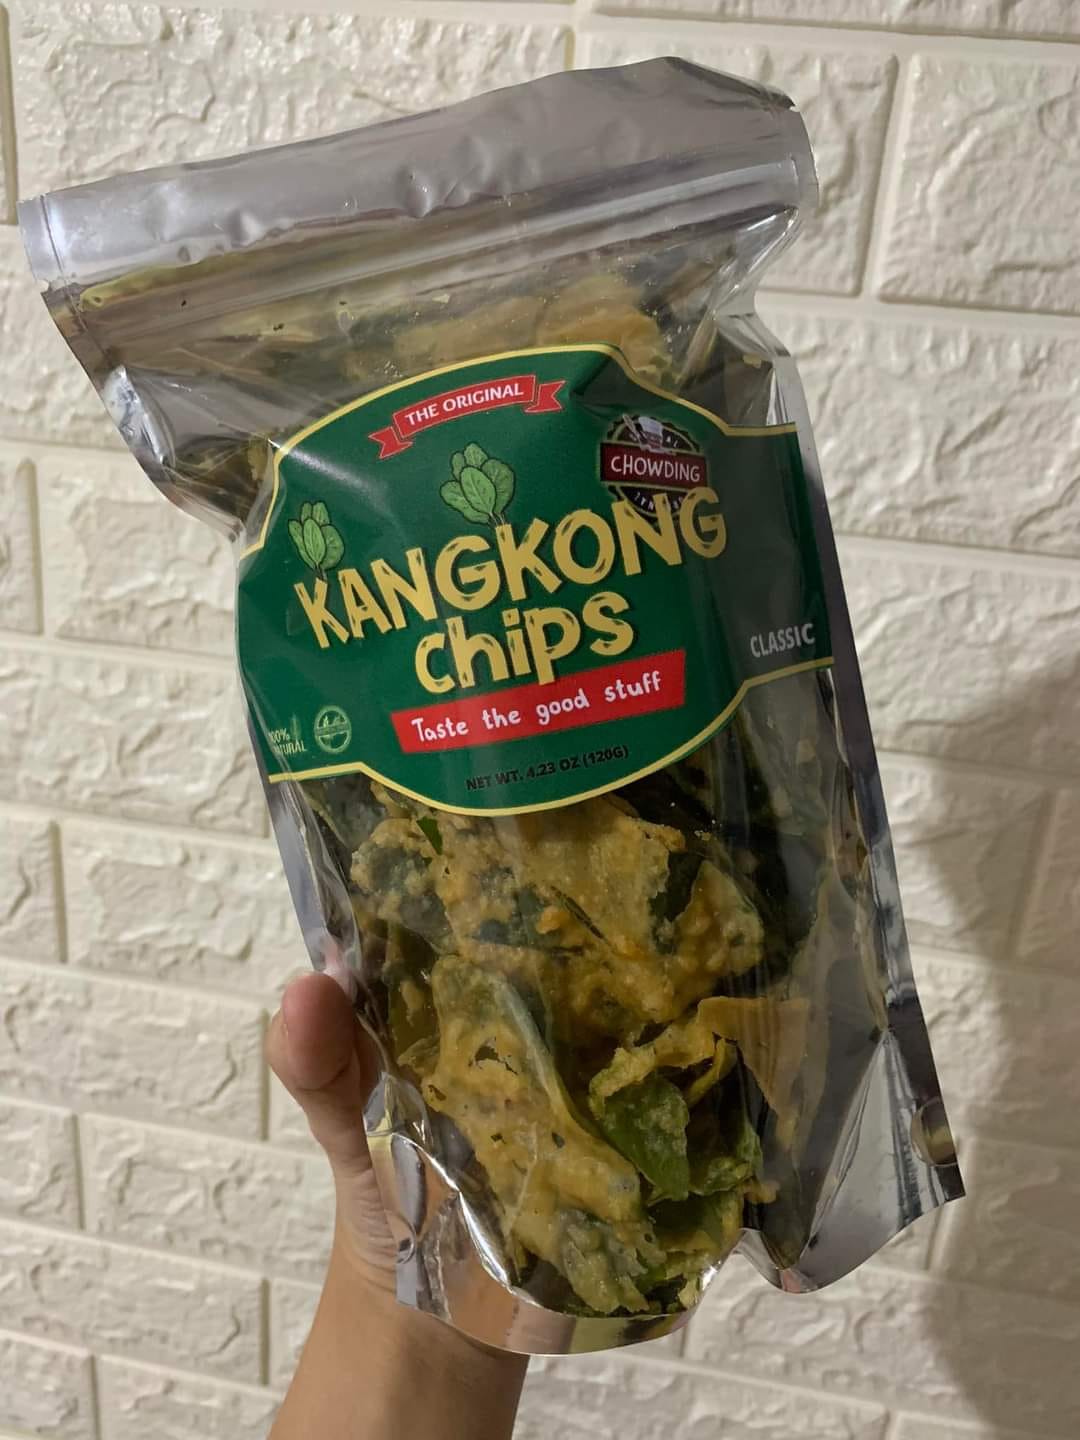 thesis about kangkong chips